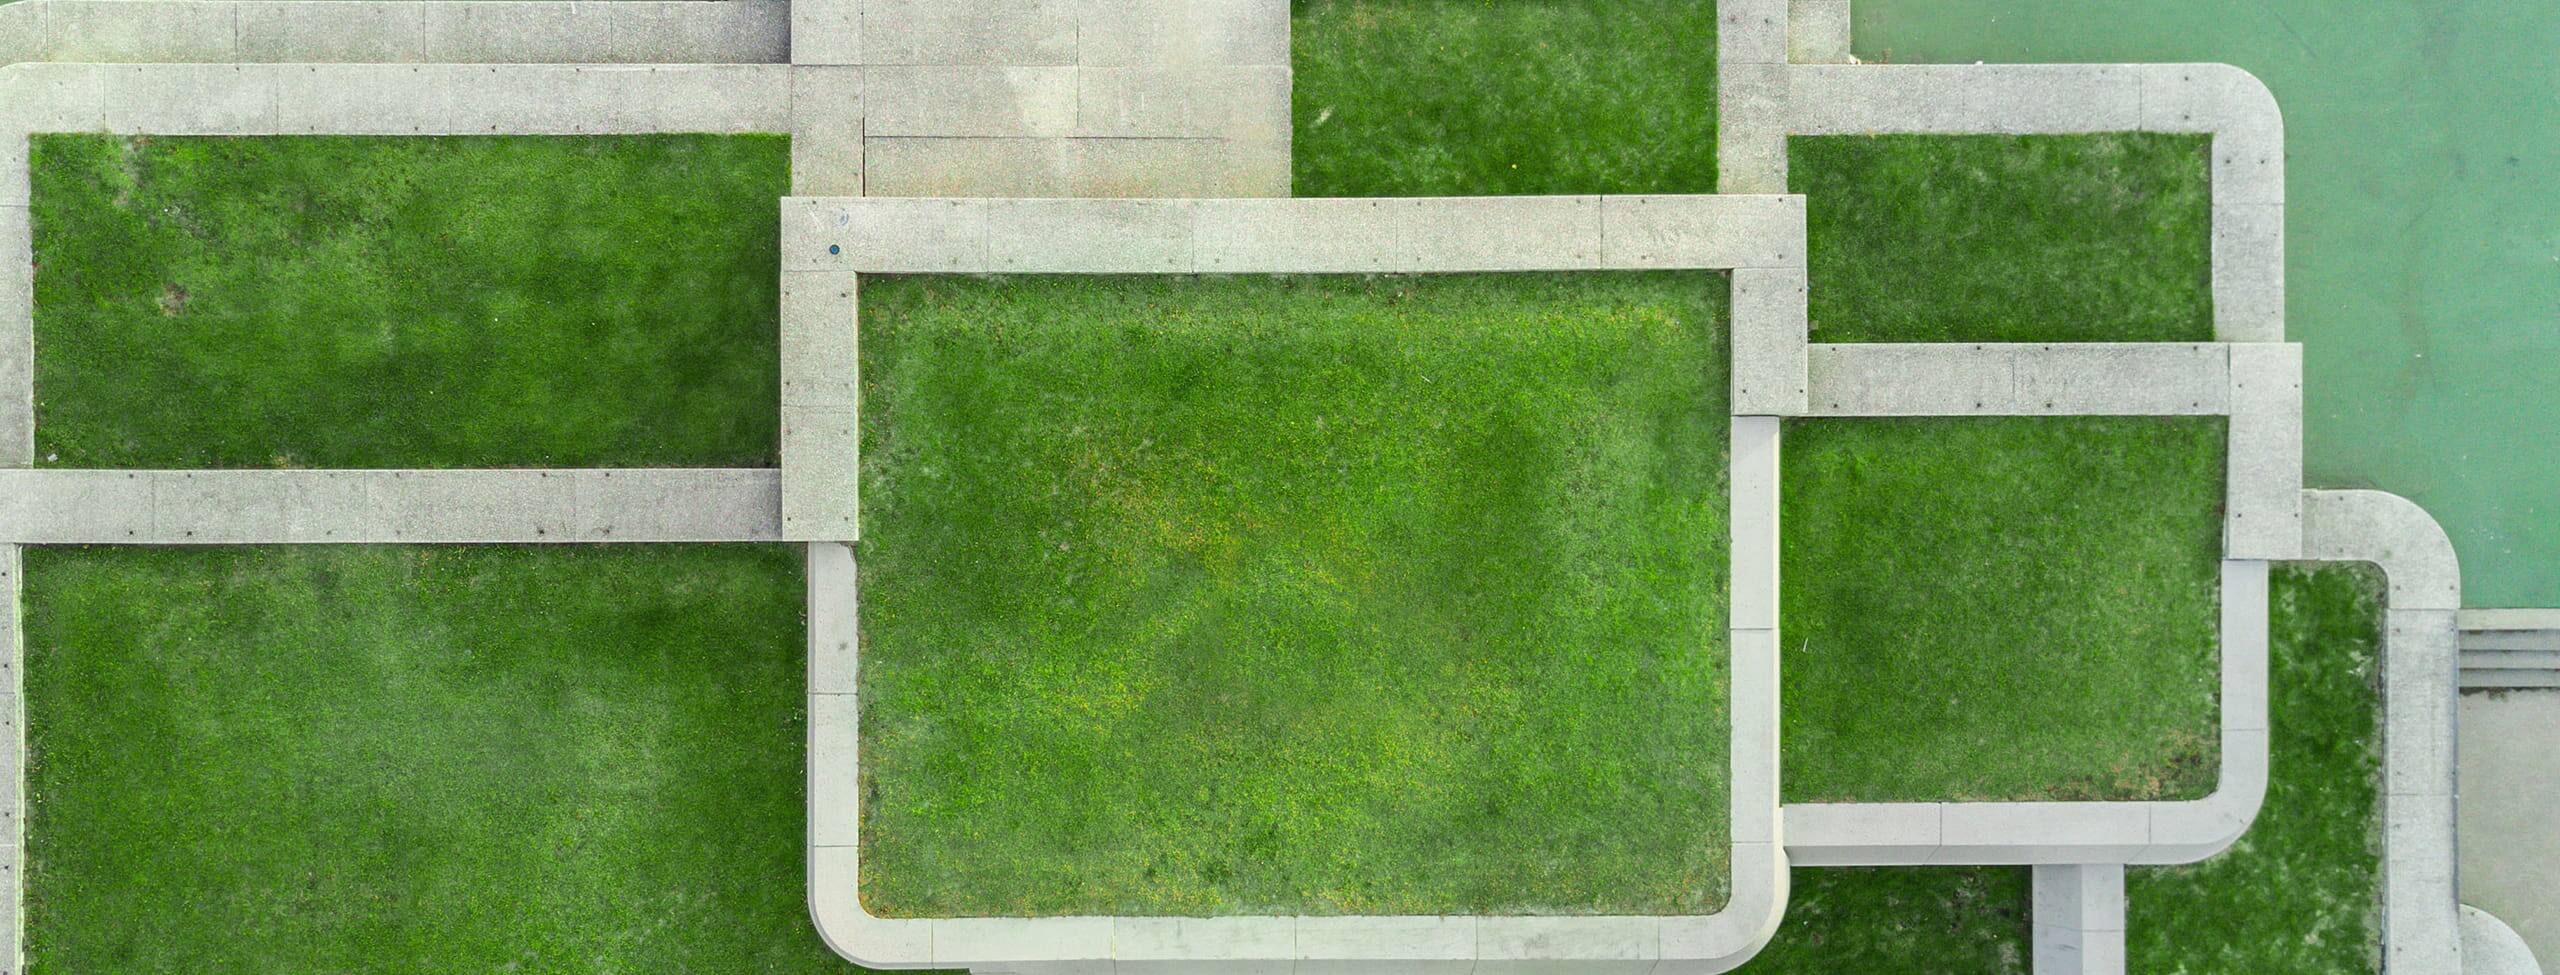 Split level grassy area